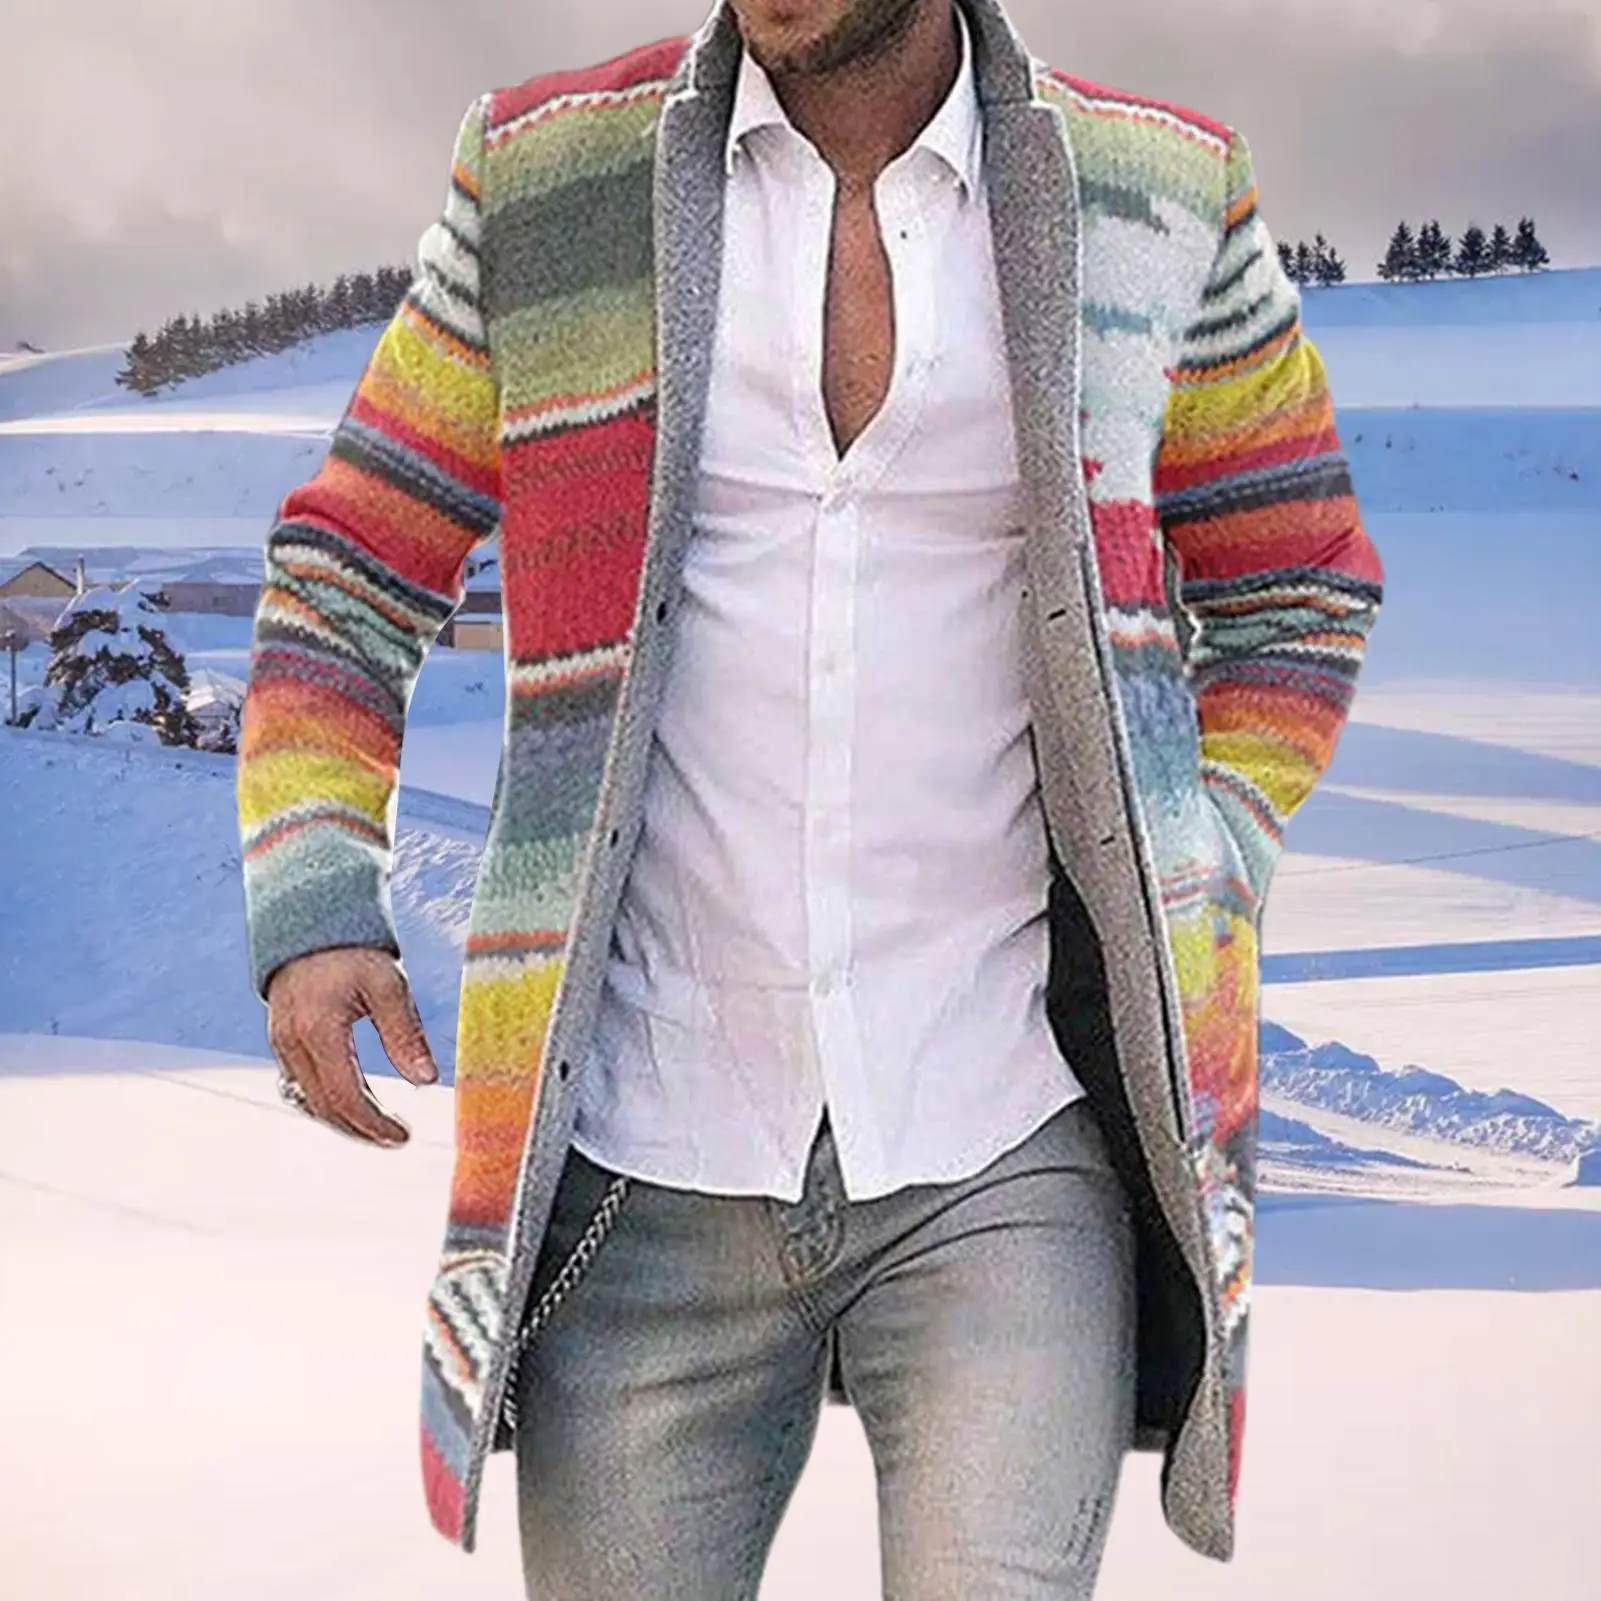 Men's Stripes Coat Jacket Hooded Cardigan Solid Color Long Sleeve Autumn Winter Coat Mens Overcoat Abrigo Hombre Outwear 2020